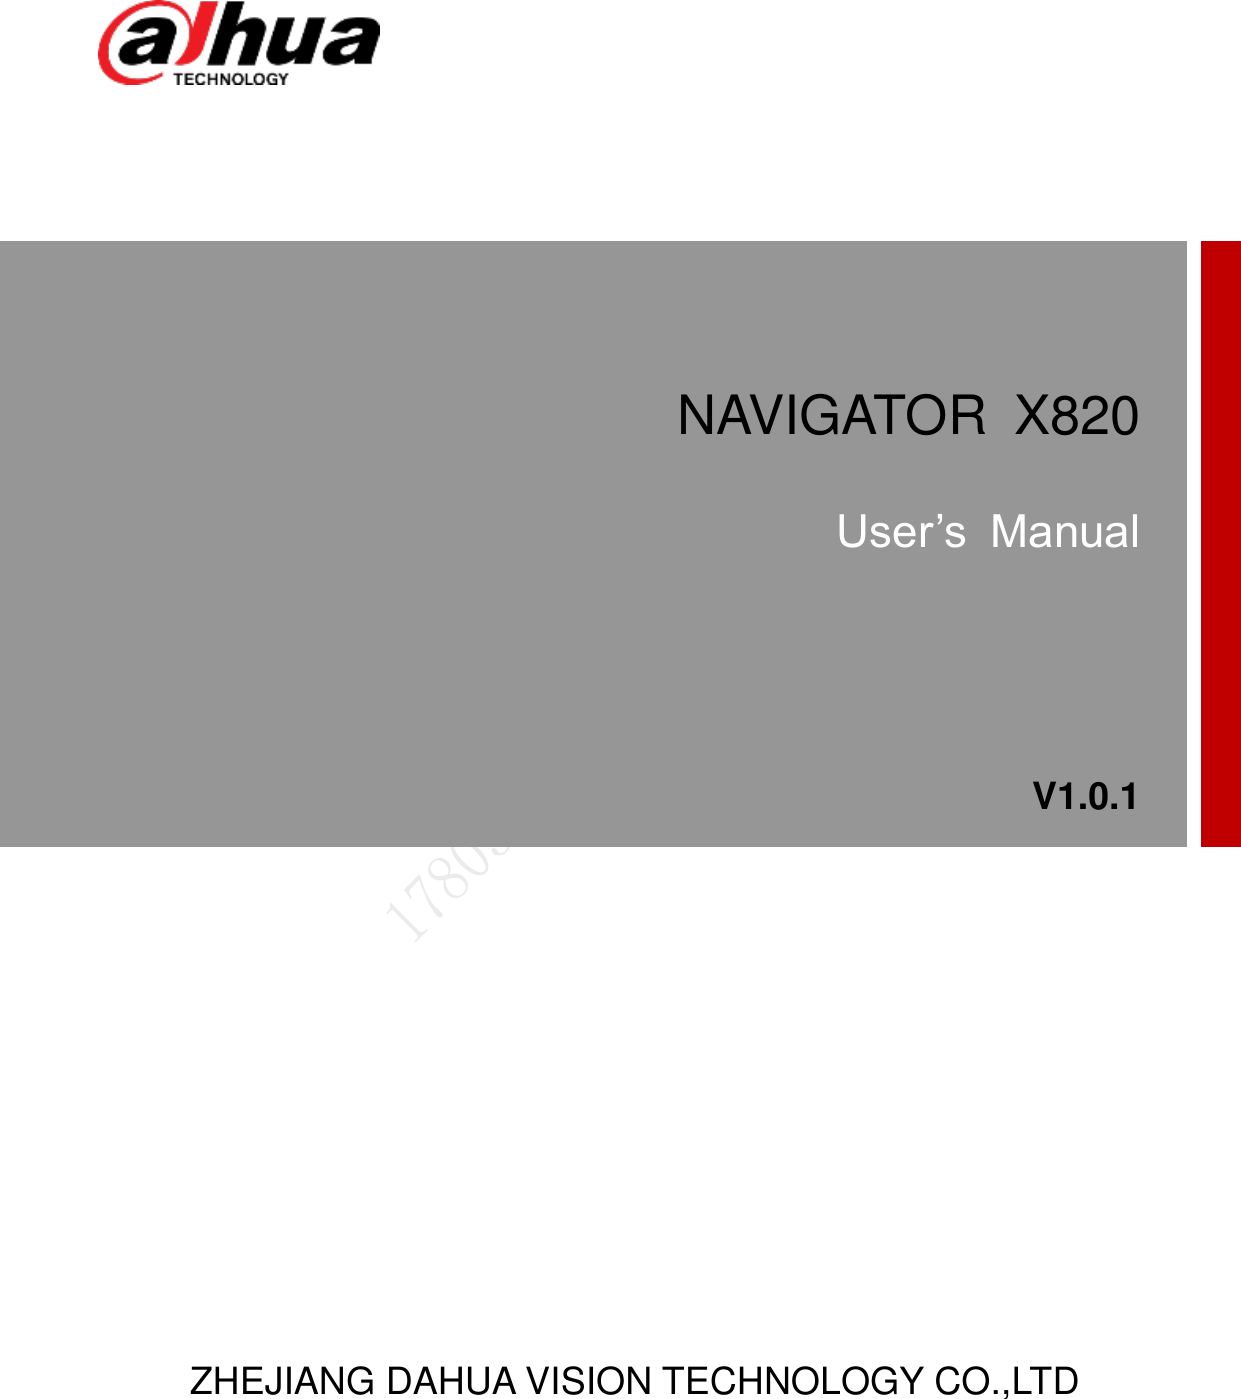         NAVIGATOR  X820 User’s  Manual V1.0.1 ZHEJIANG DAHUA VISION TECHNOLOGY CO.,LTD  